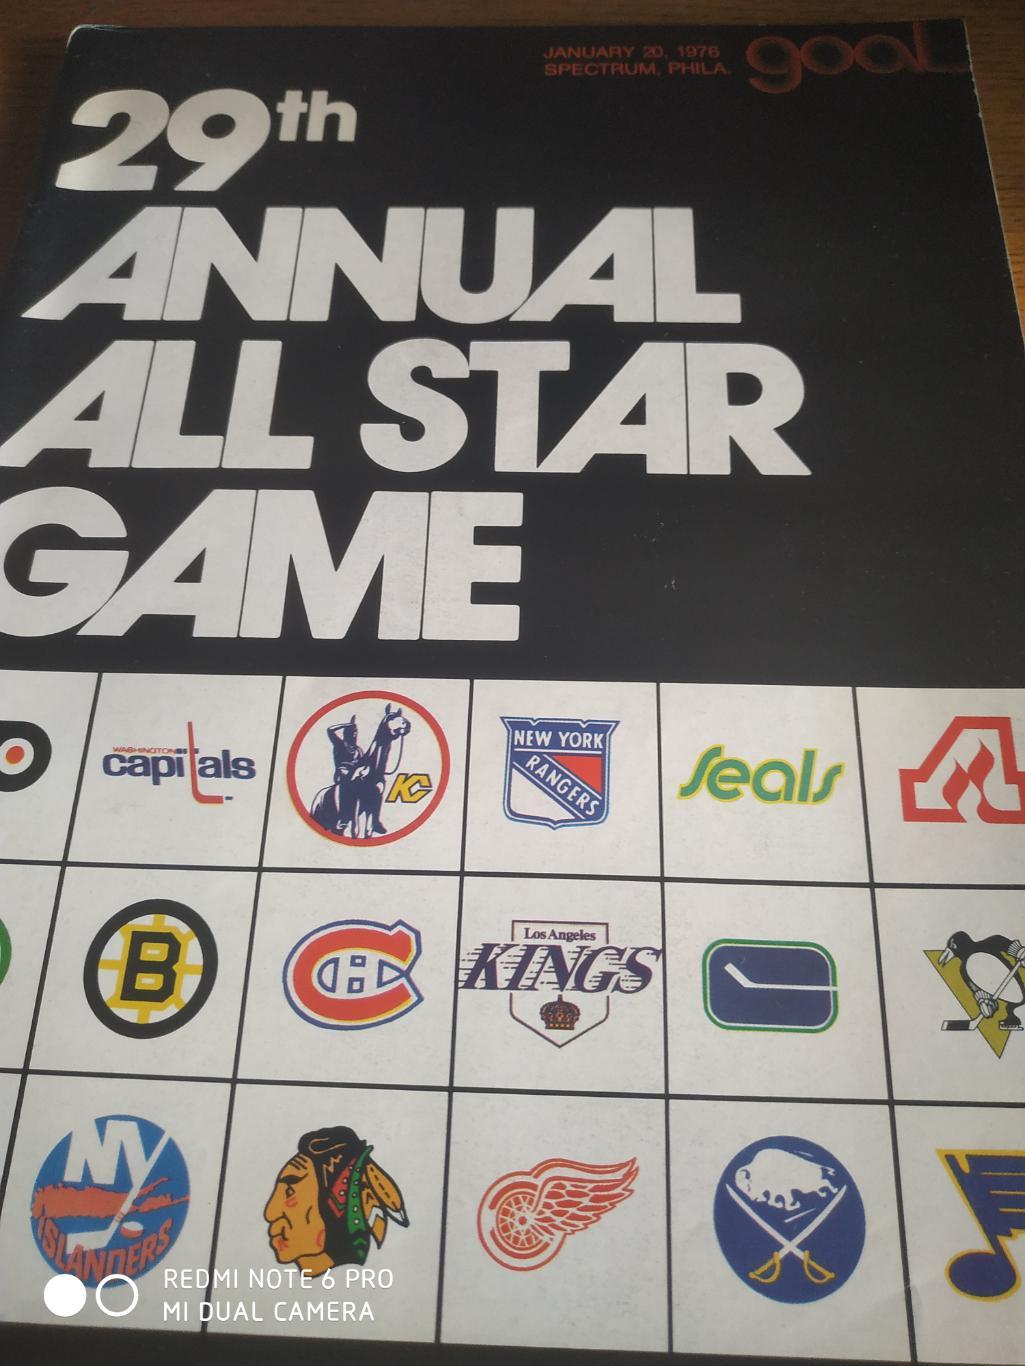 ПРОГРАММА МАТЧА ЗВЕЗД НХЛ NHL 29TH ANNUAL ALL STAR GAME 1976